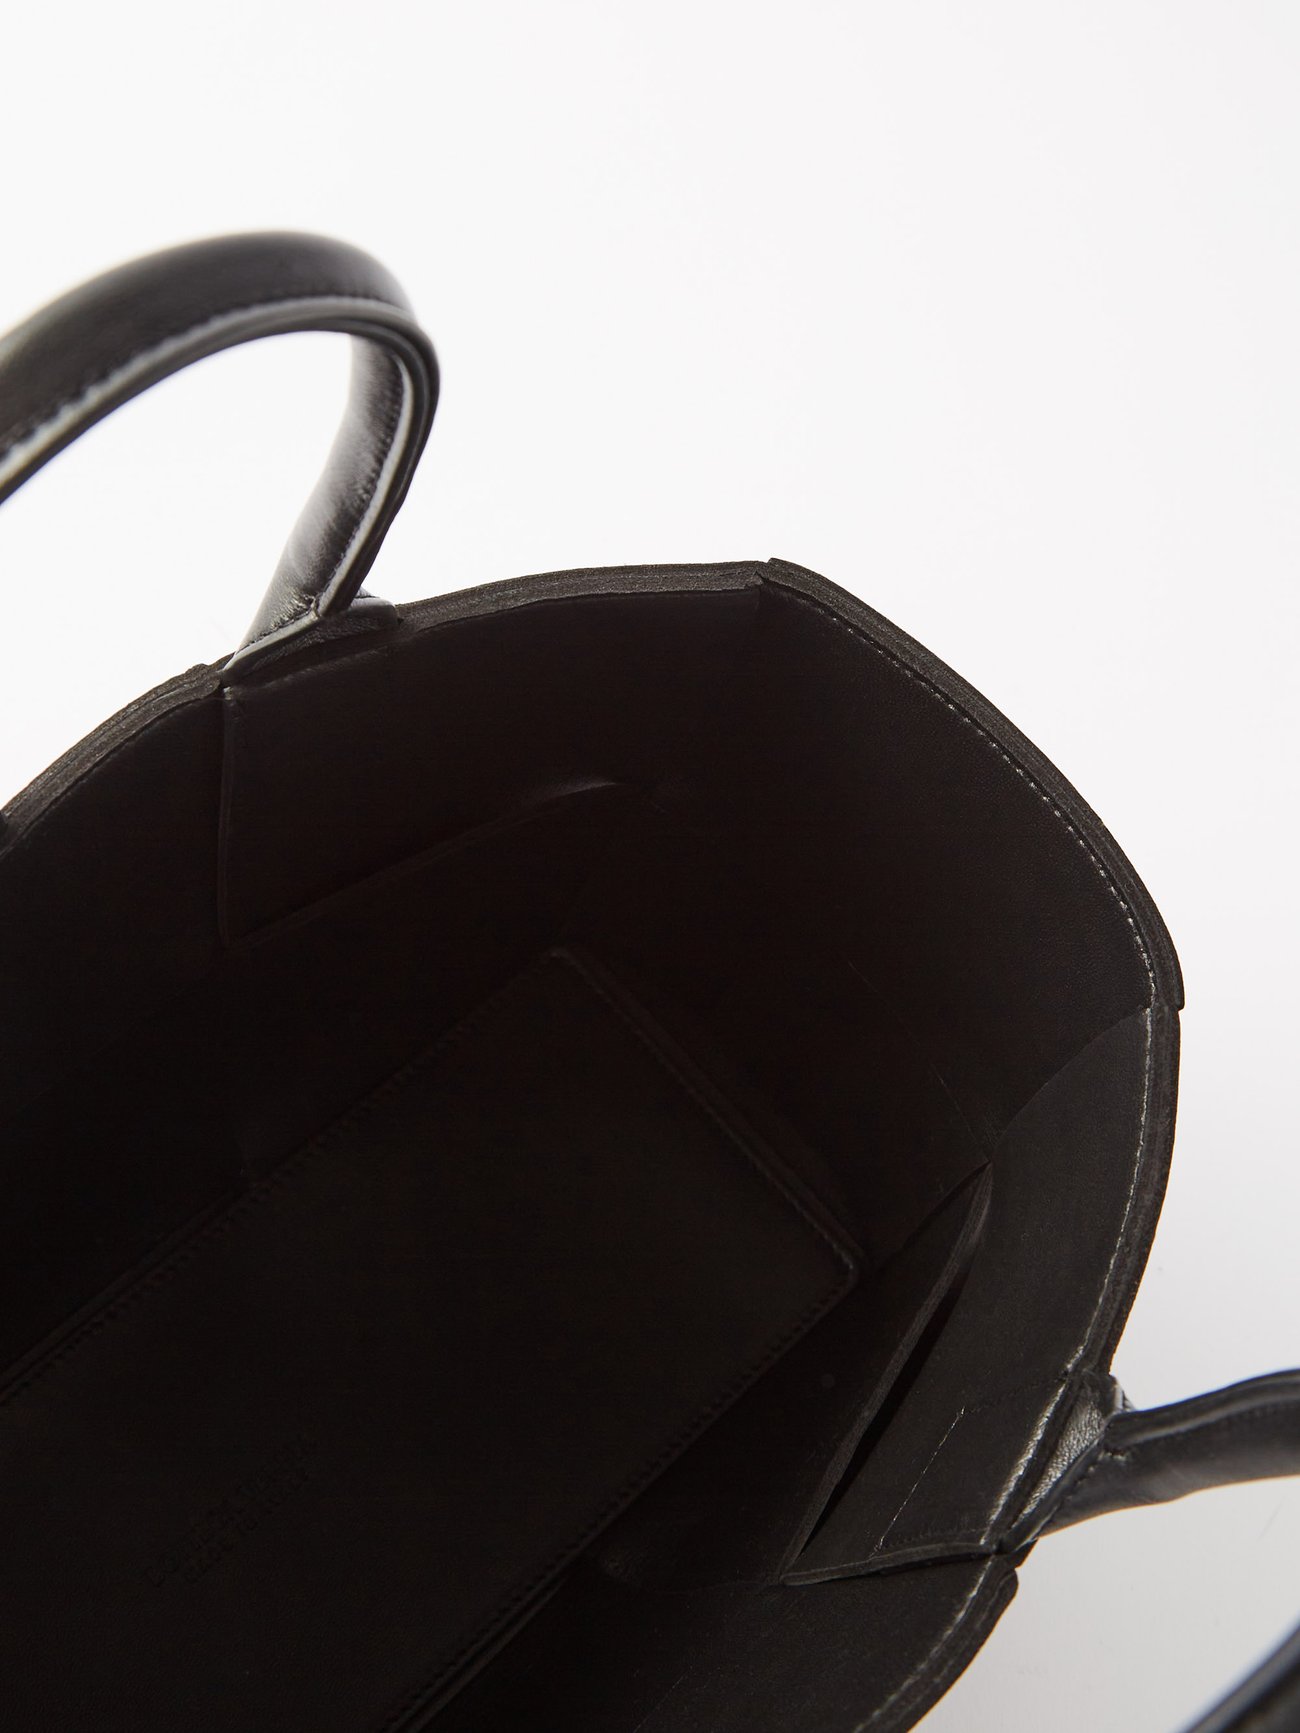 Bottega Veneta® Intrecciato Duo Bag in Black. Shop online now.